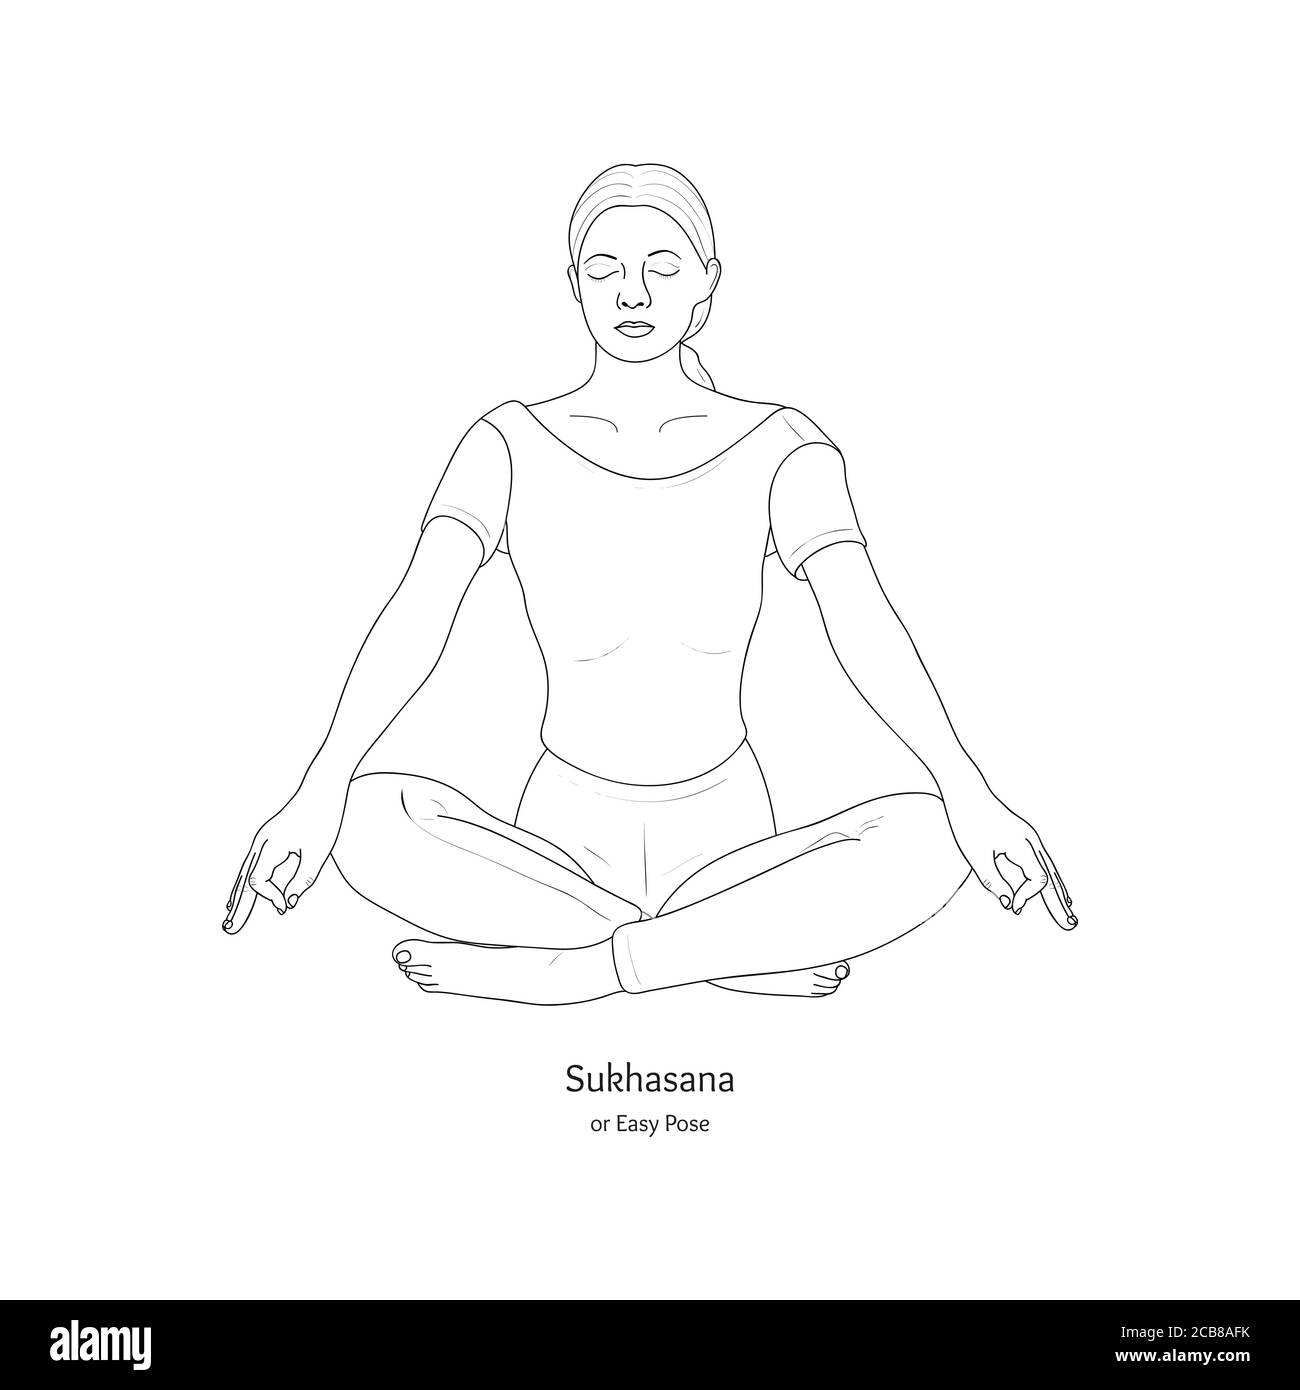 Yoga Easy Pose Cartoon Vector Illustration Stock Vector (Royalty Free)  437464516 | Shutterstock